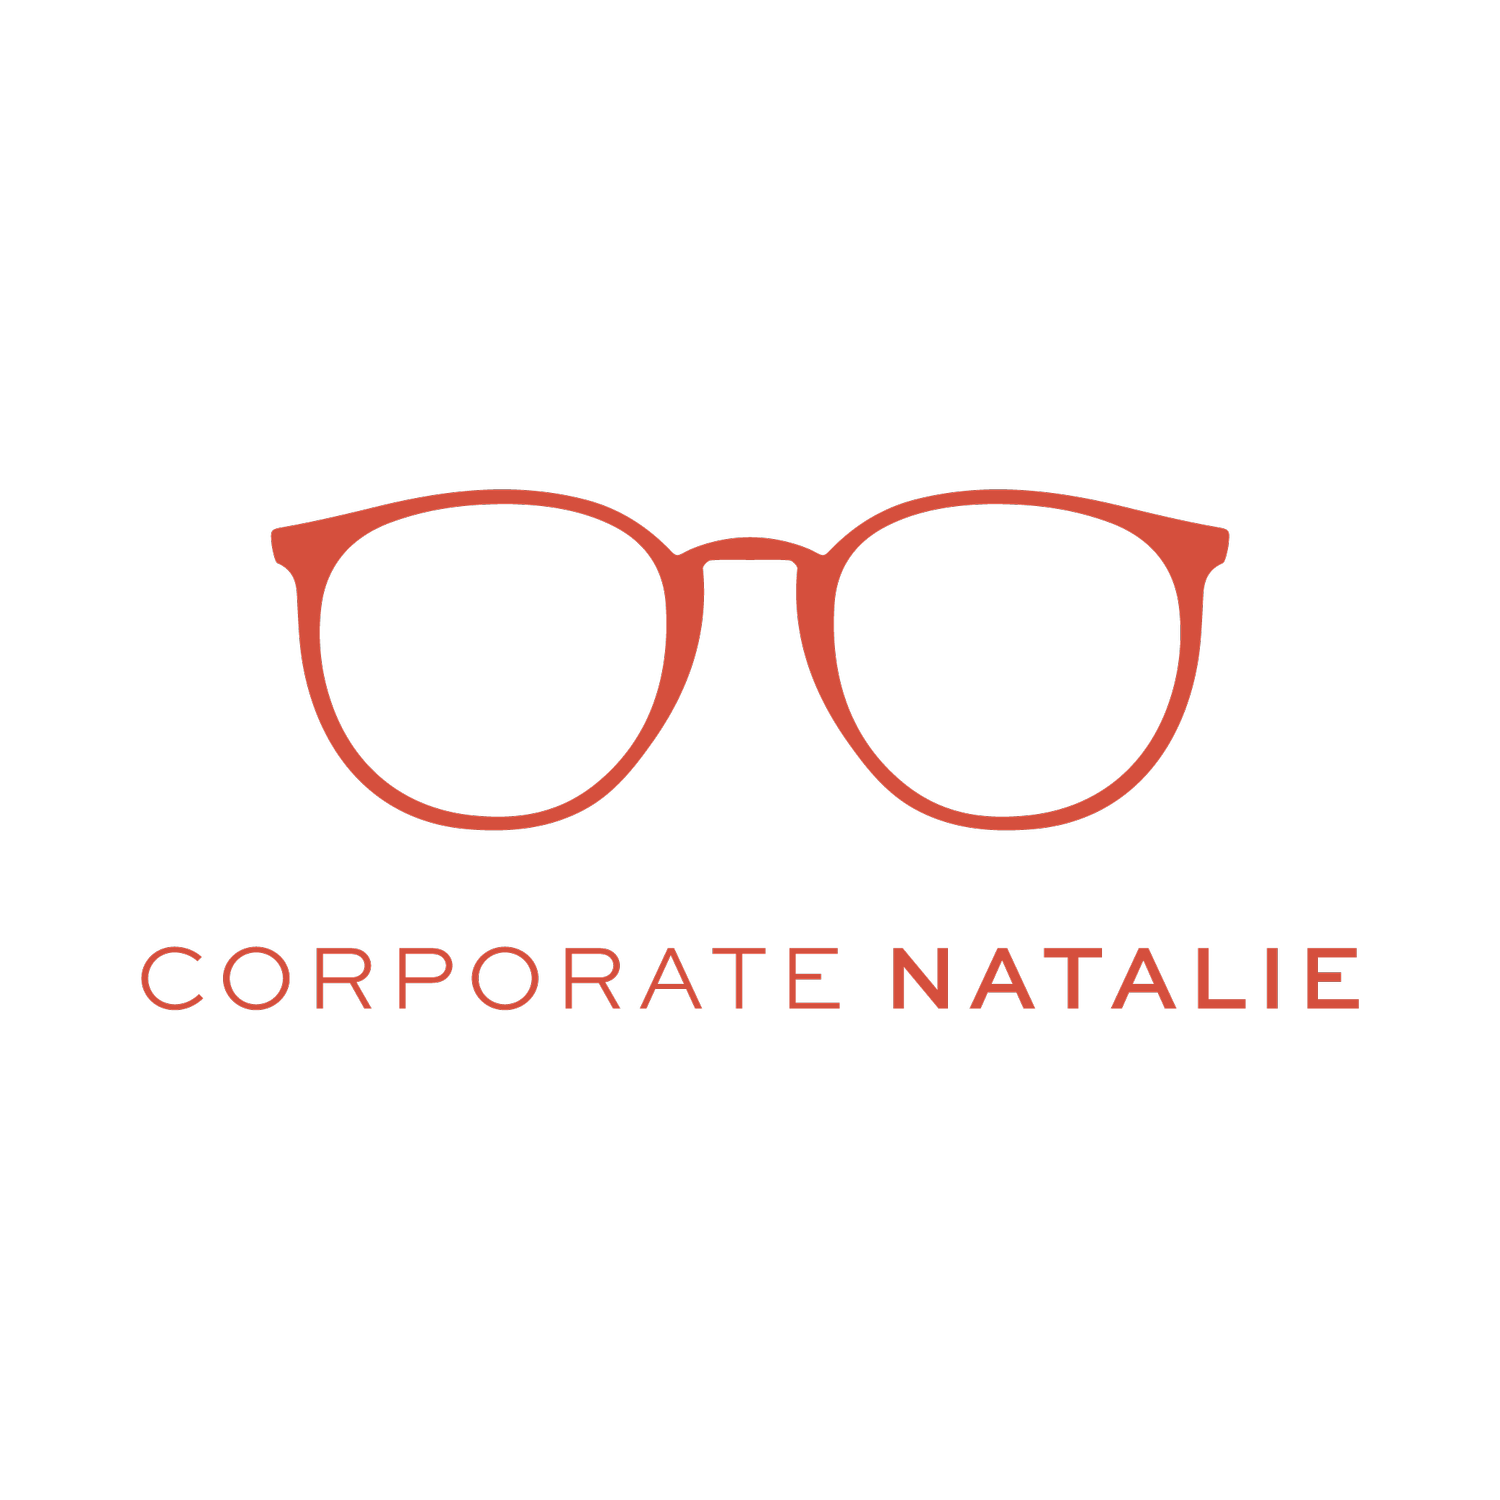 Corporate Natalie